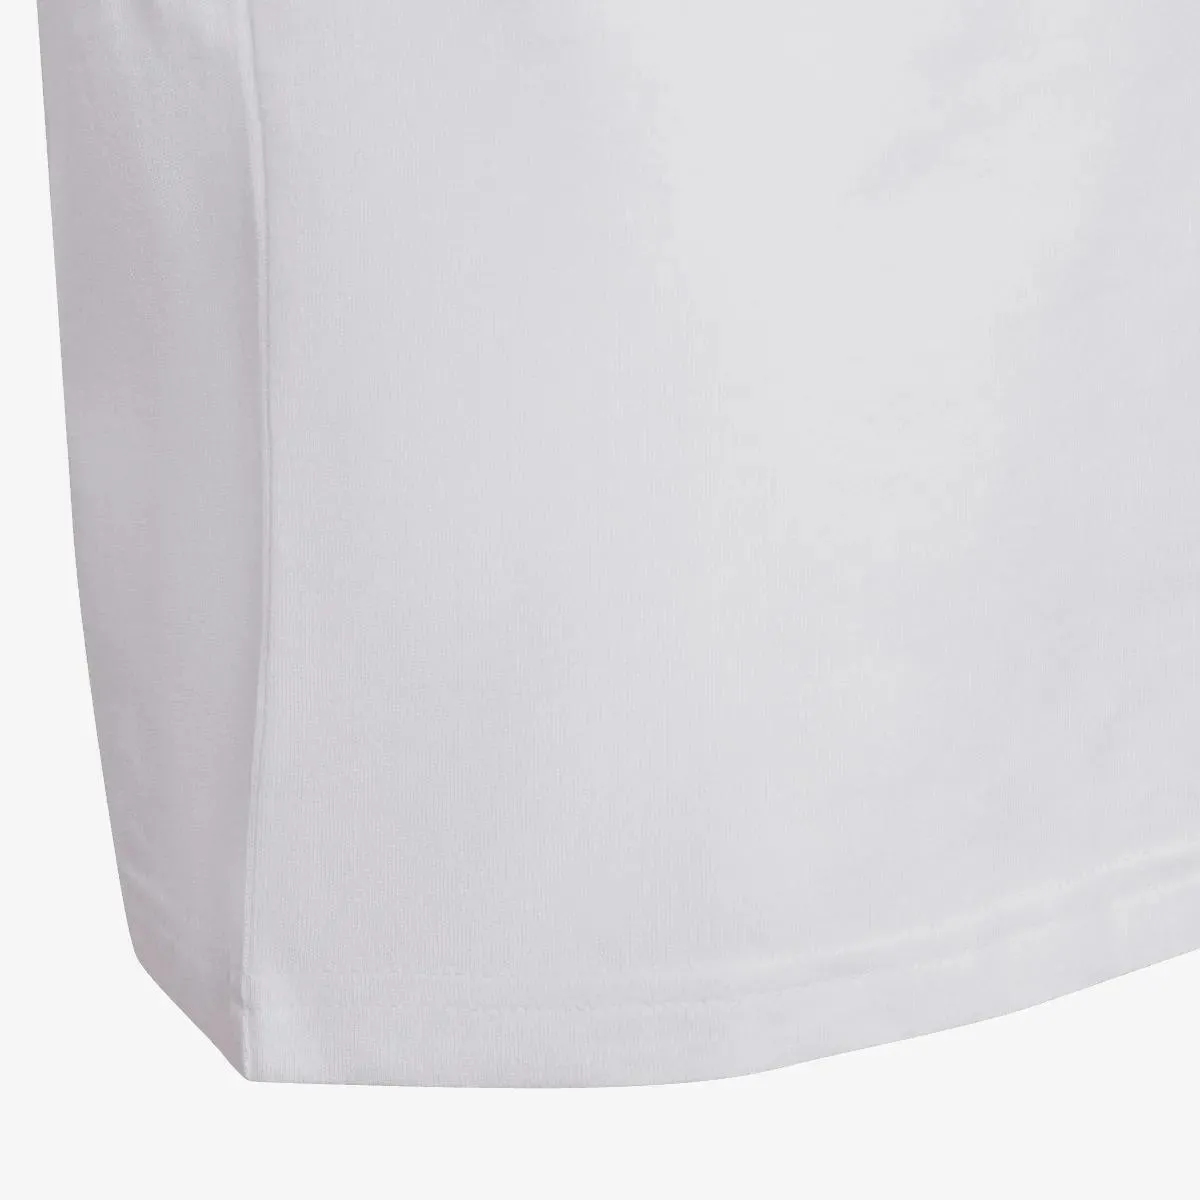 adidas T-shirt Linear 